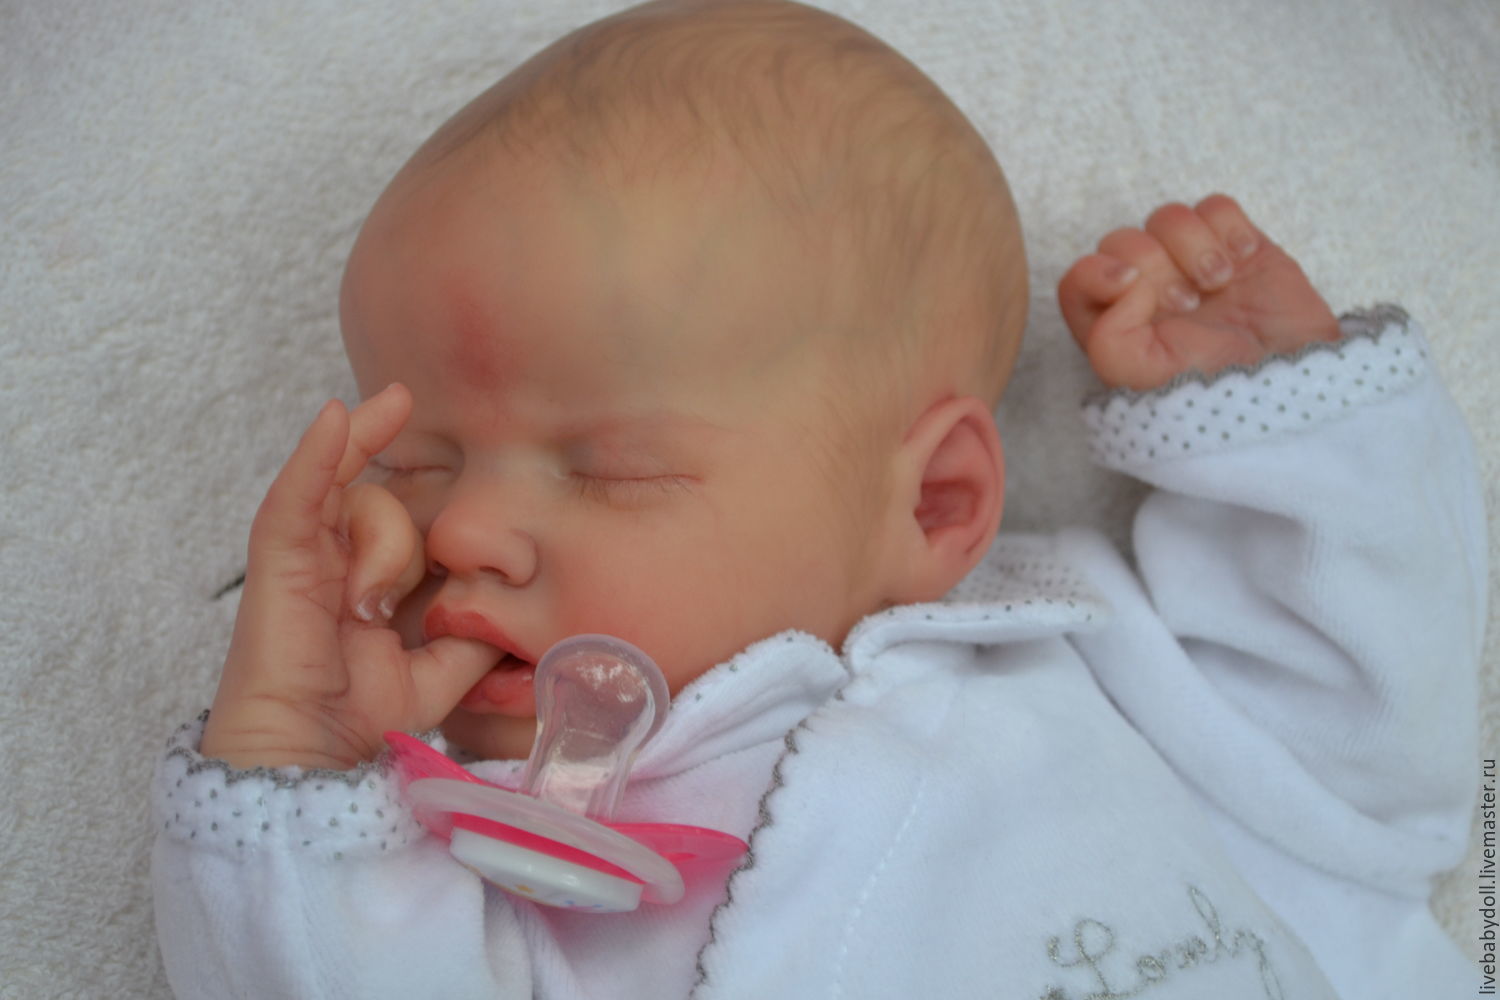 How to Buy Reborn Baby Dolls | eBay